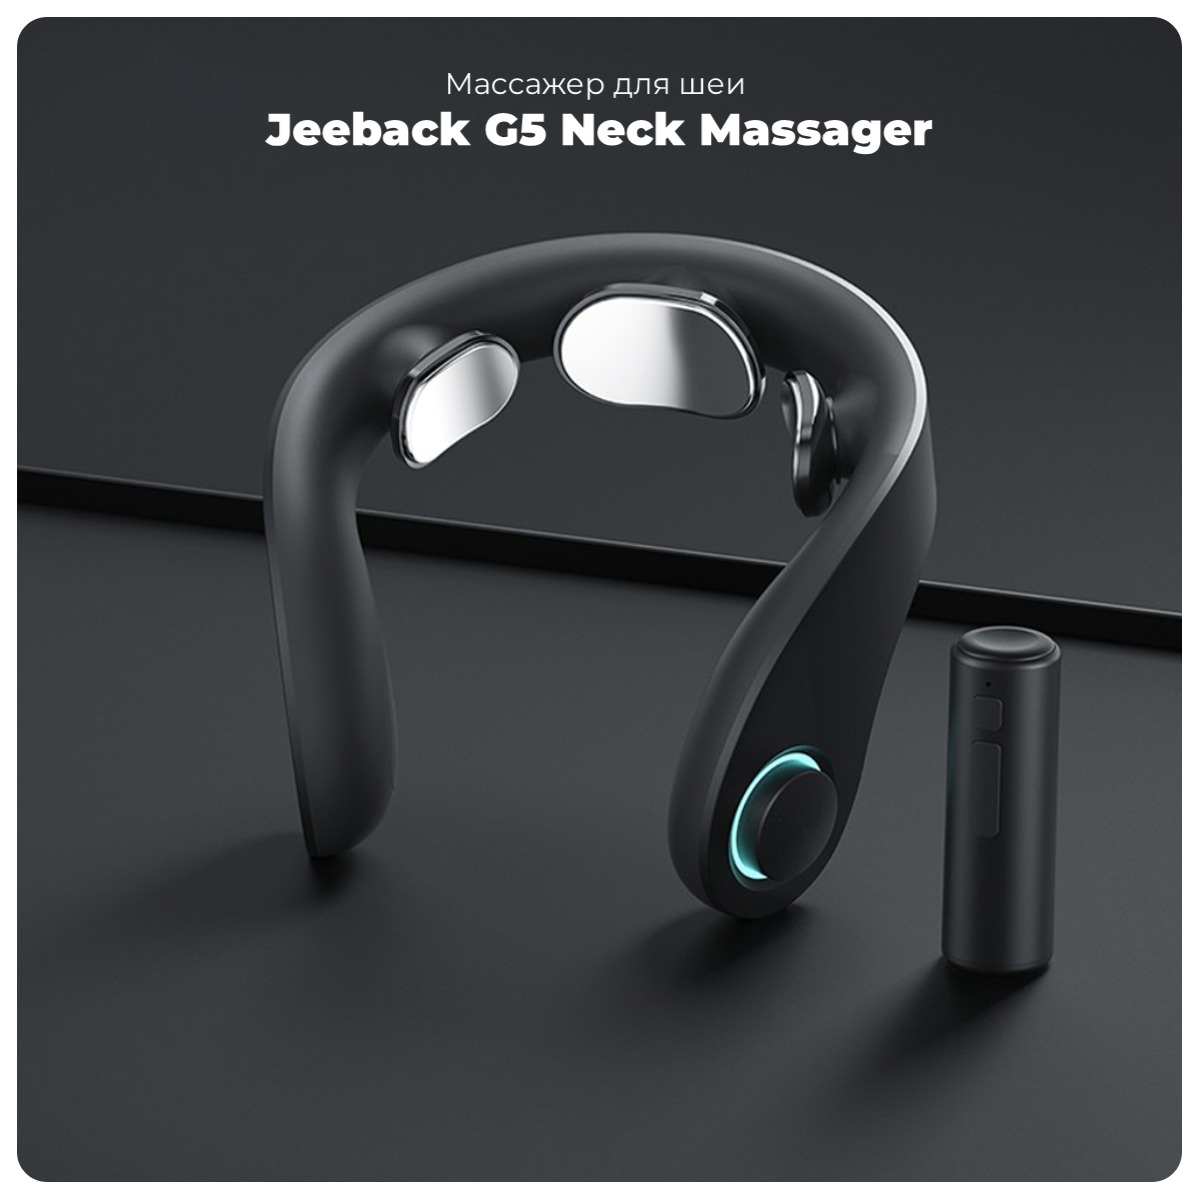 Jeeback-G5-Neck-Massager-05